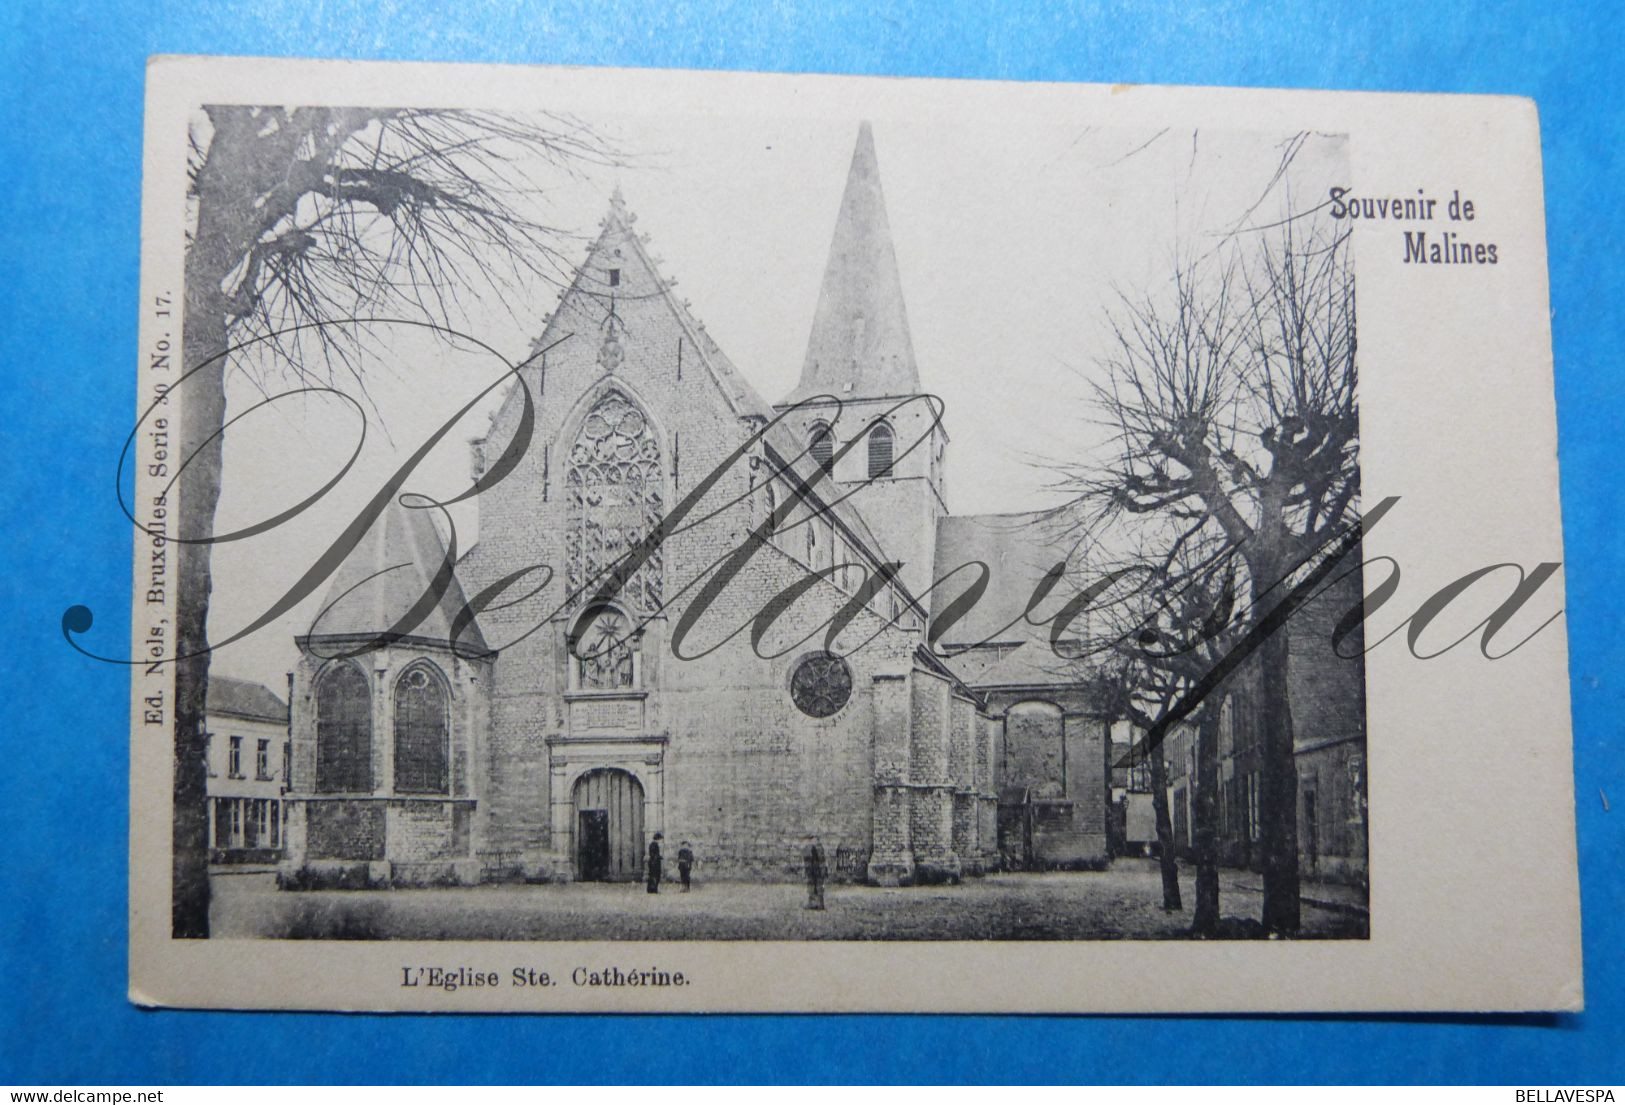 Mechelen Kerk St. Katherina Nels Serie 30, N°17 - Watermaal-Bosvoorde - Watermael-Boitsfort